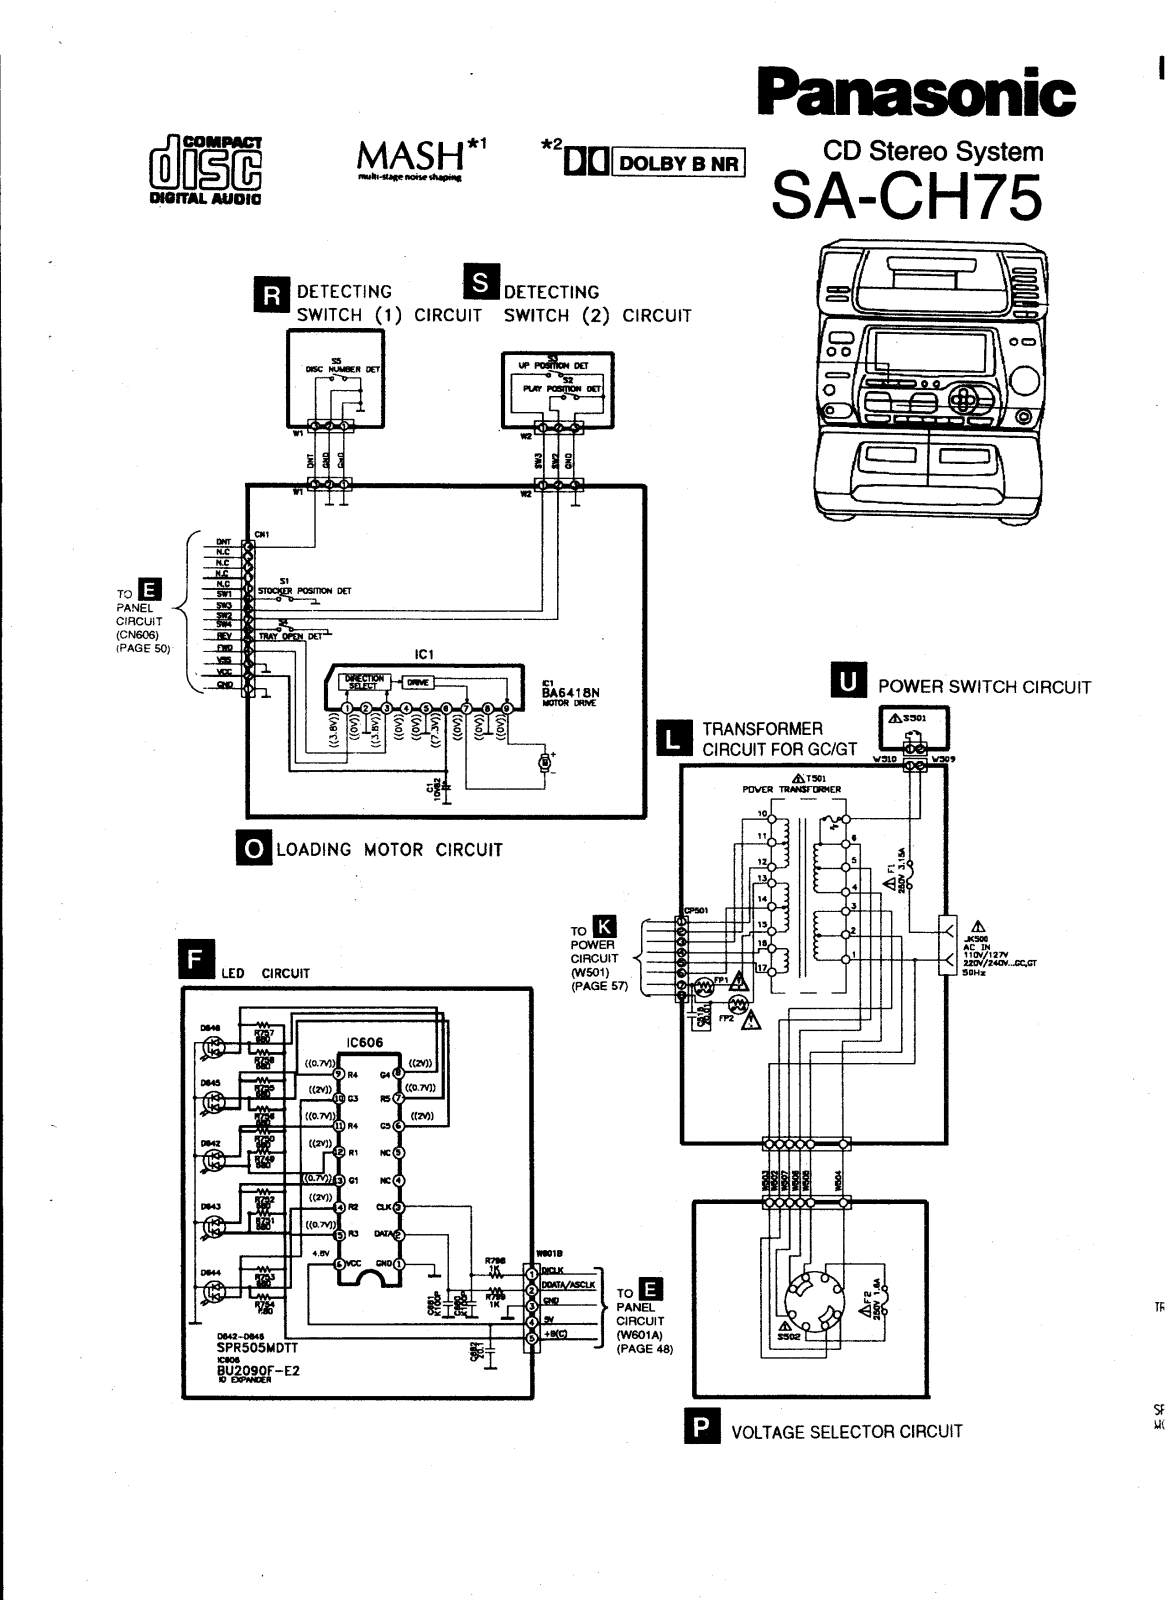 Panasonic SACH-75 Service manual